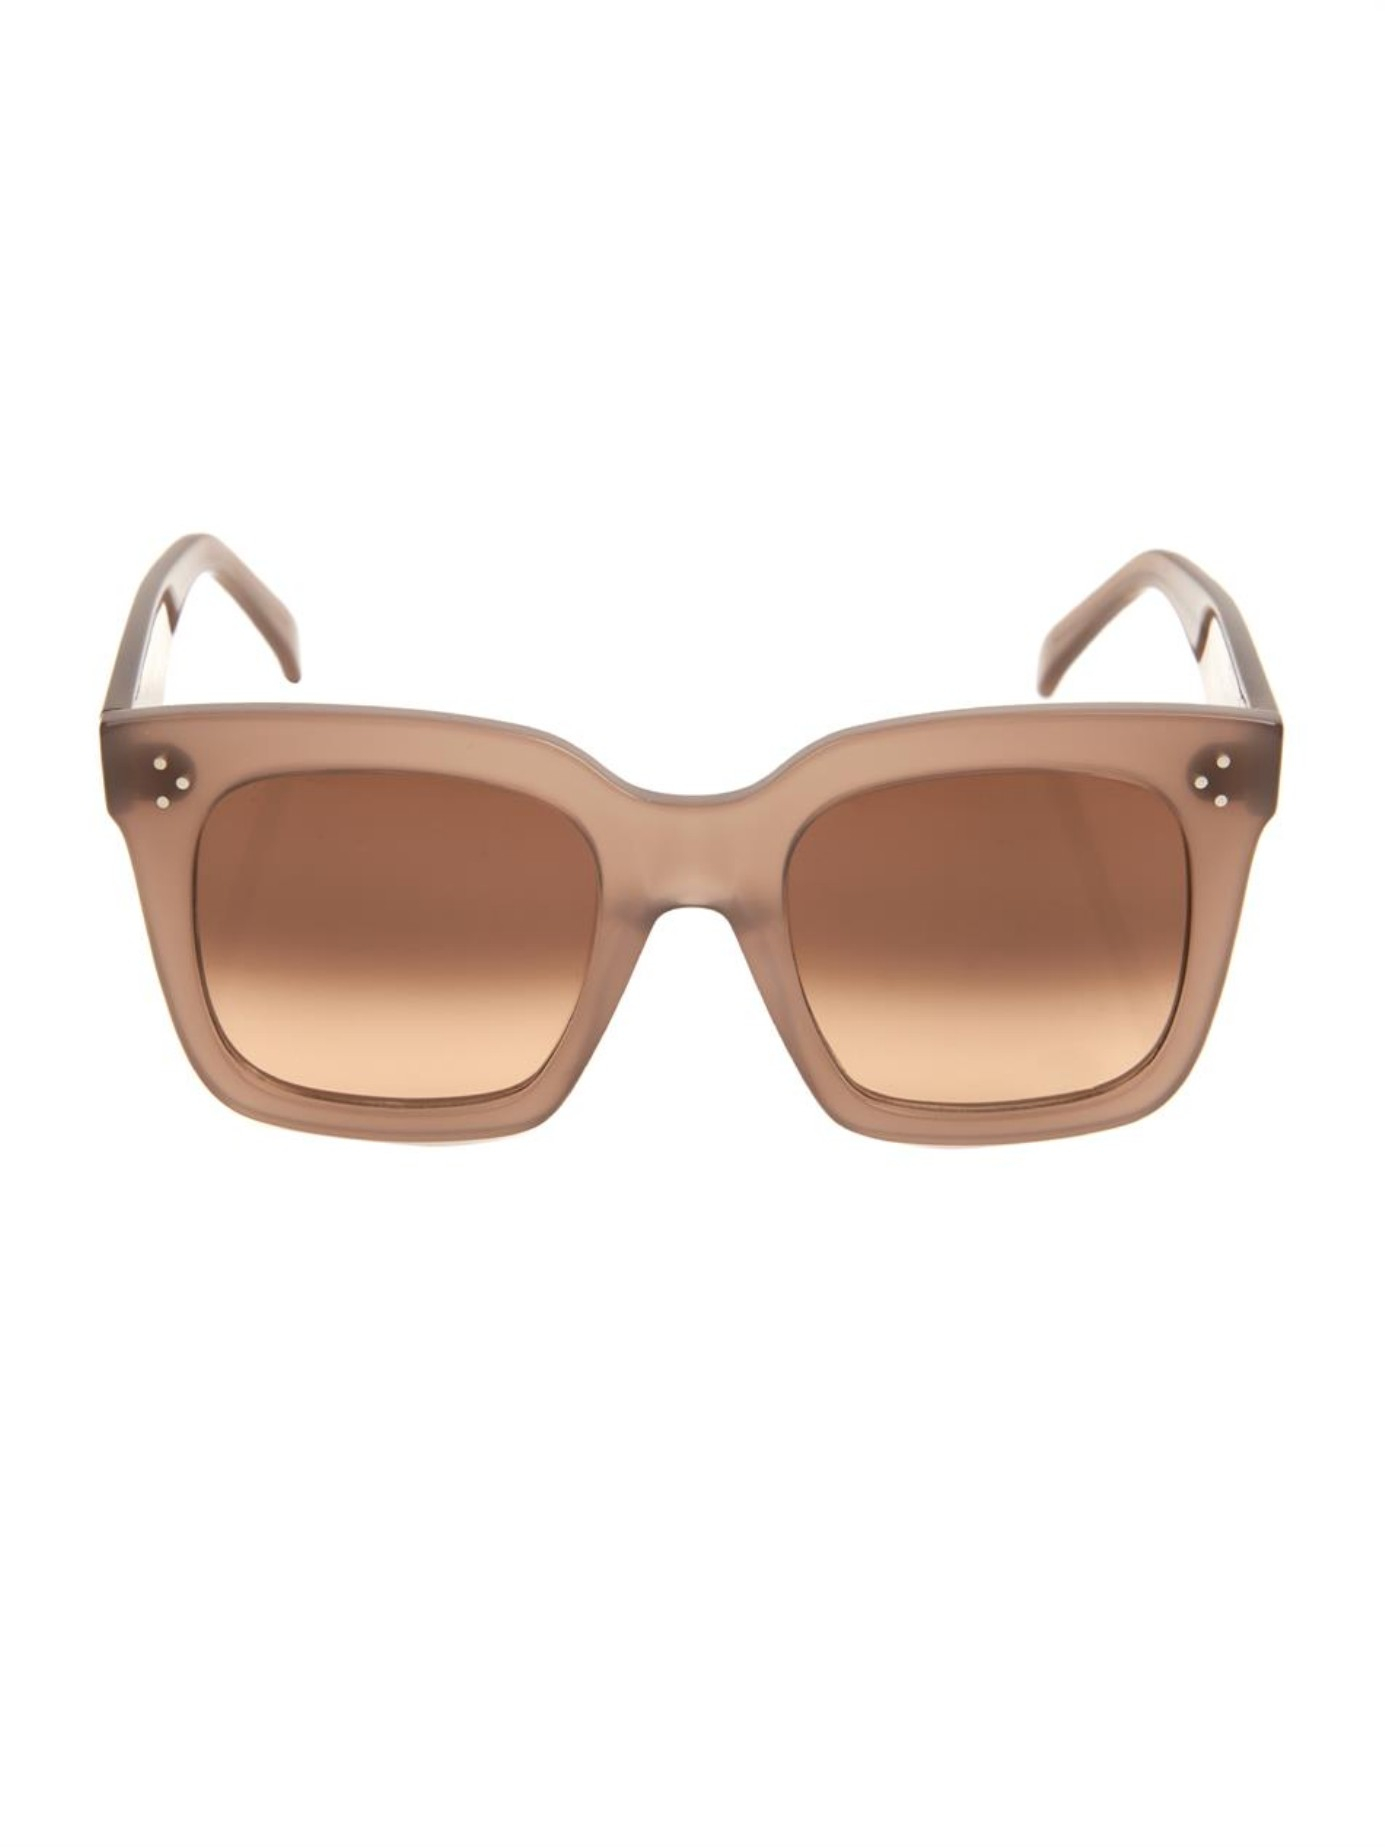 Celine Square-Framed Acetate Sunglasses in Brown | Lyst